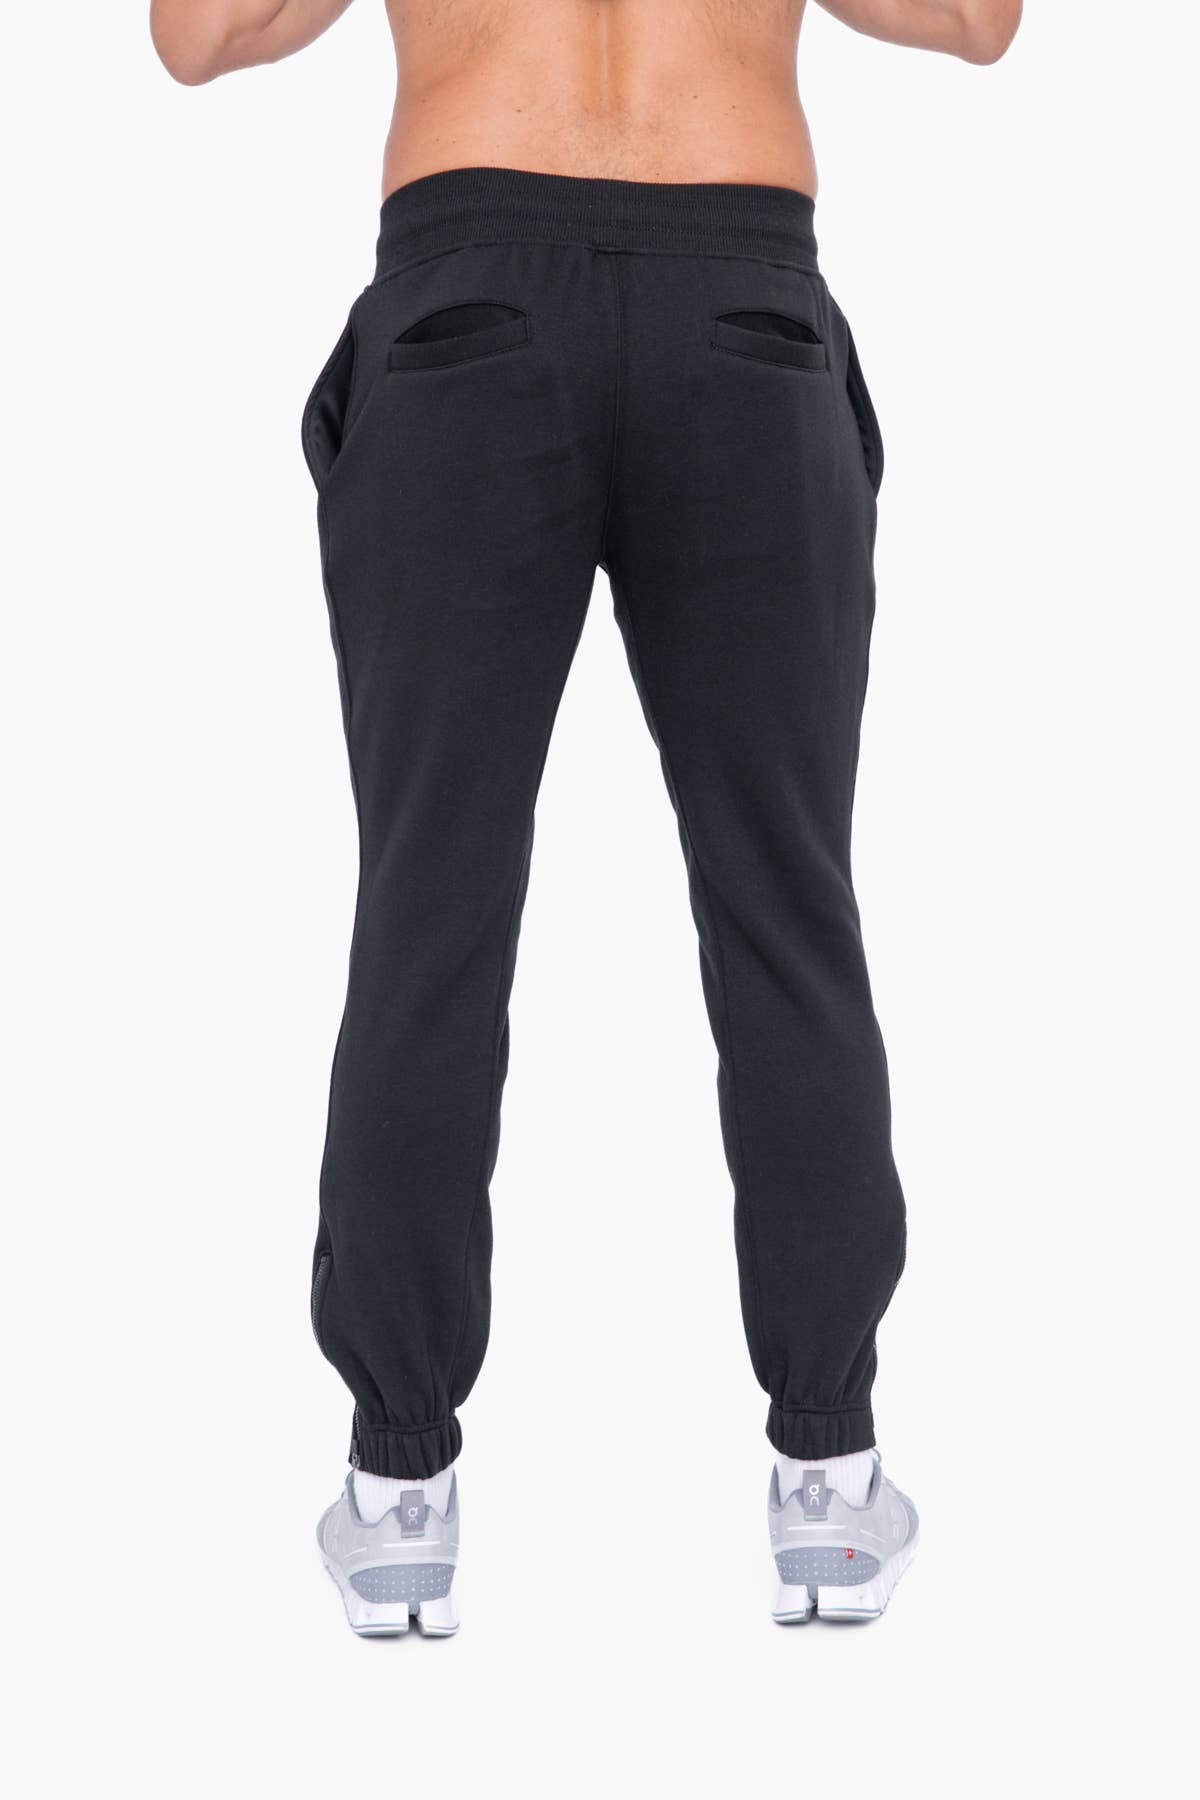 Mono B MEN - Athletic Pants with Zipper Ankles